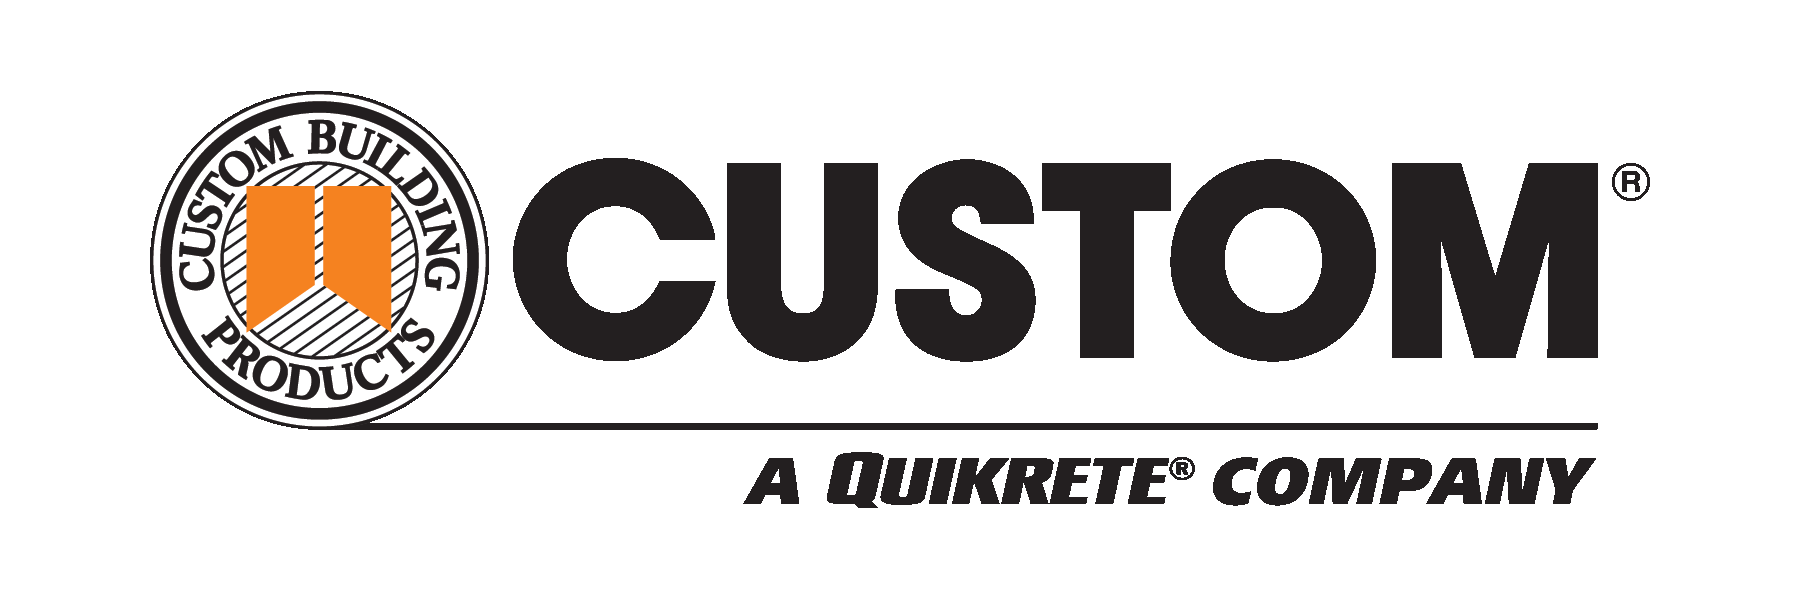 CUSTOM Building Products_QUIKRETE_LOGO_2C (002)2021